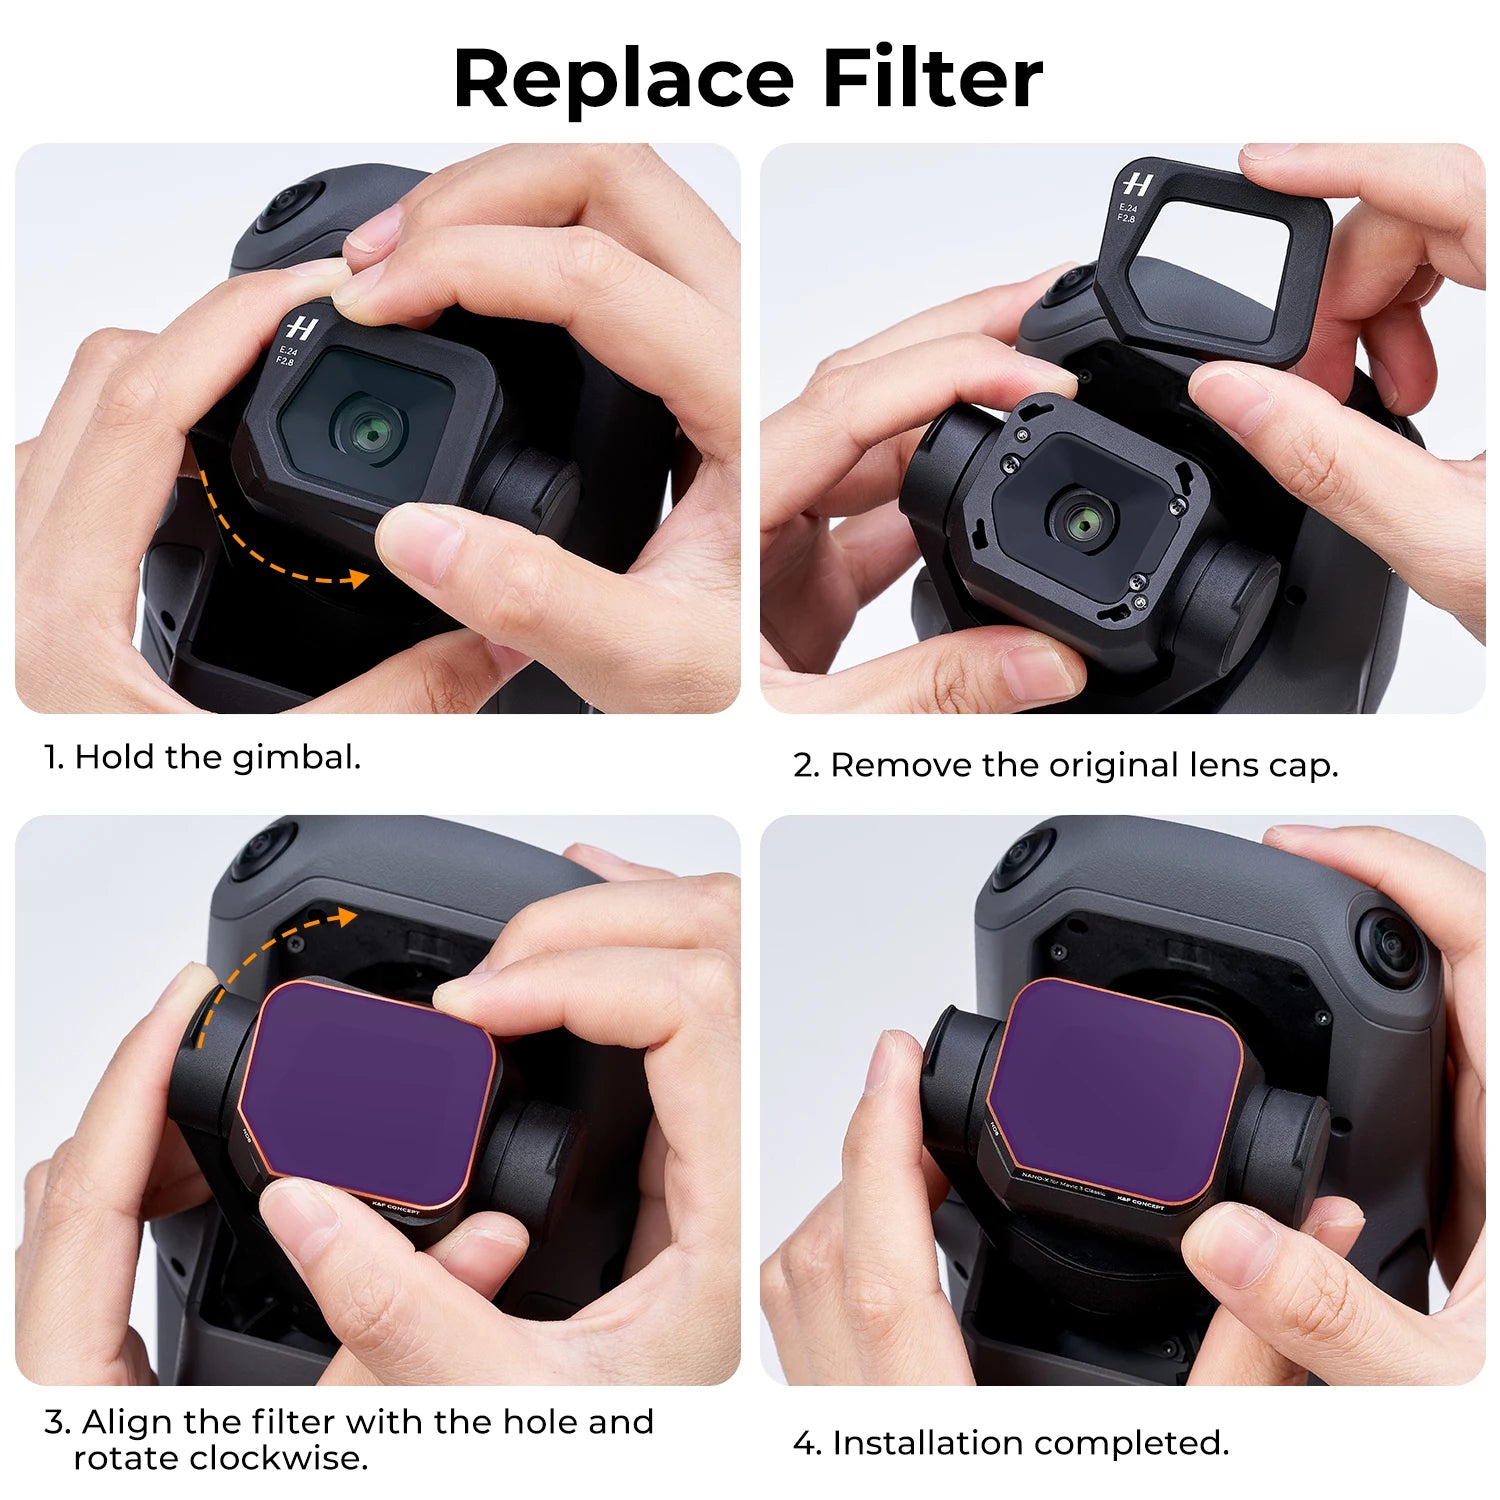 replace Filter [24 F28 H 1. Remove the original lens cap. 3. Align the